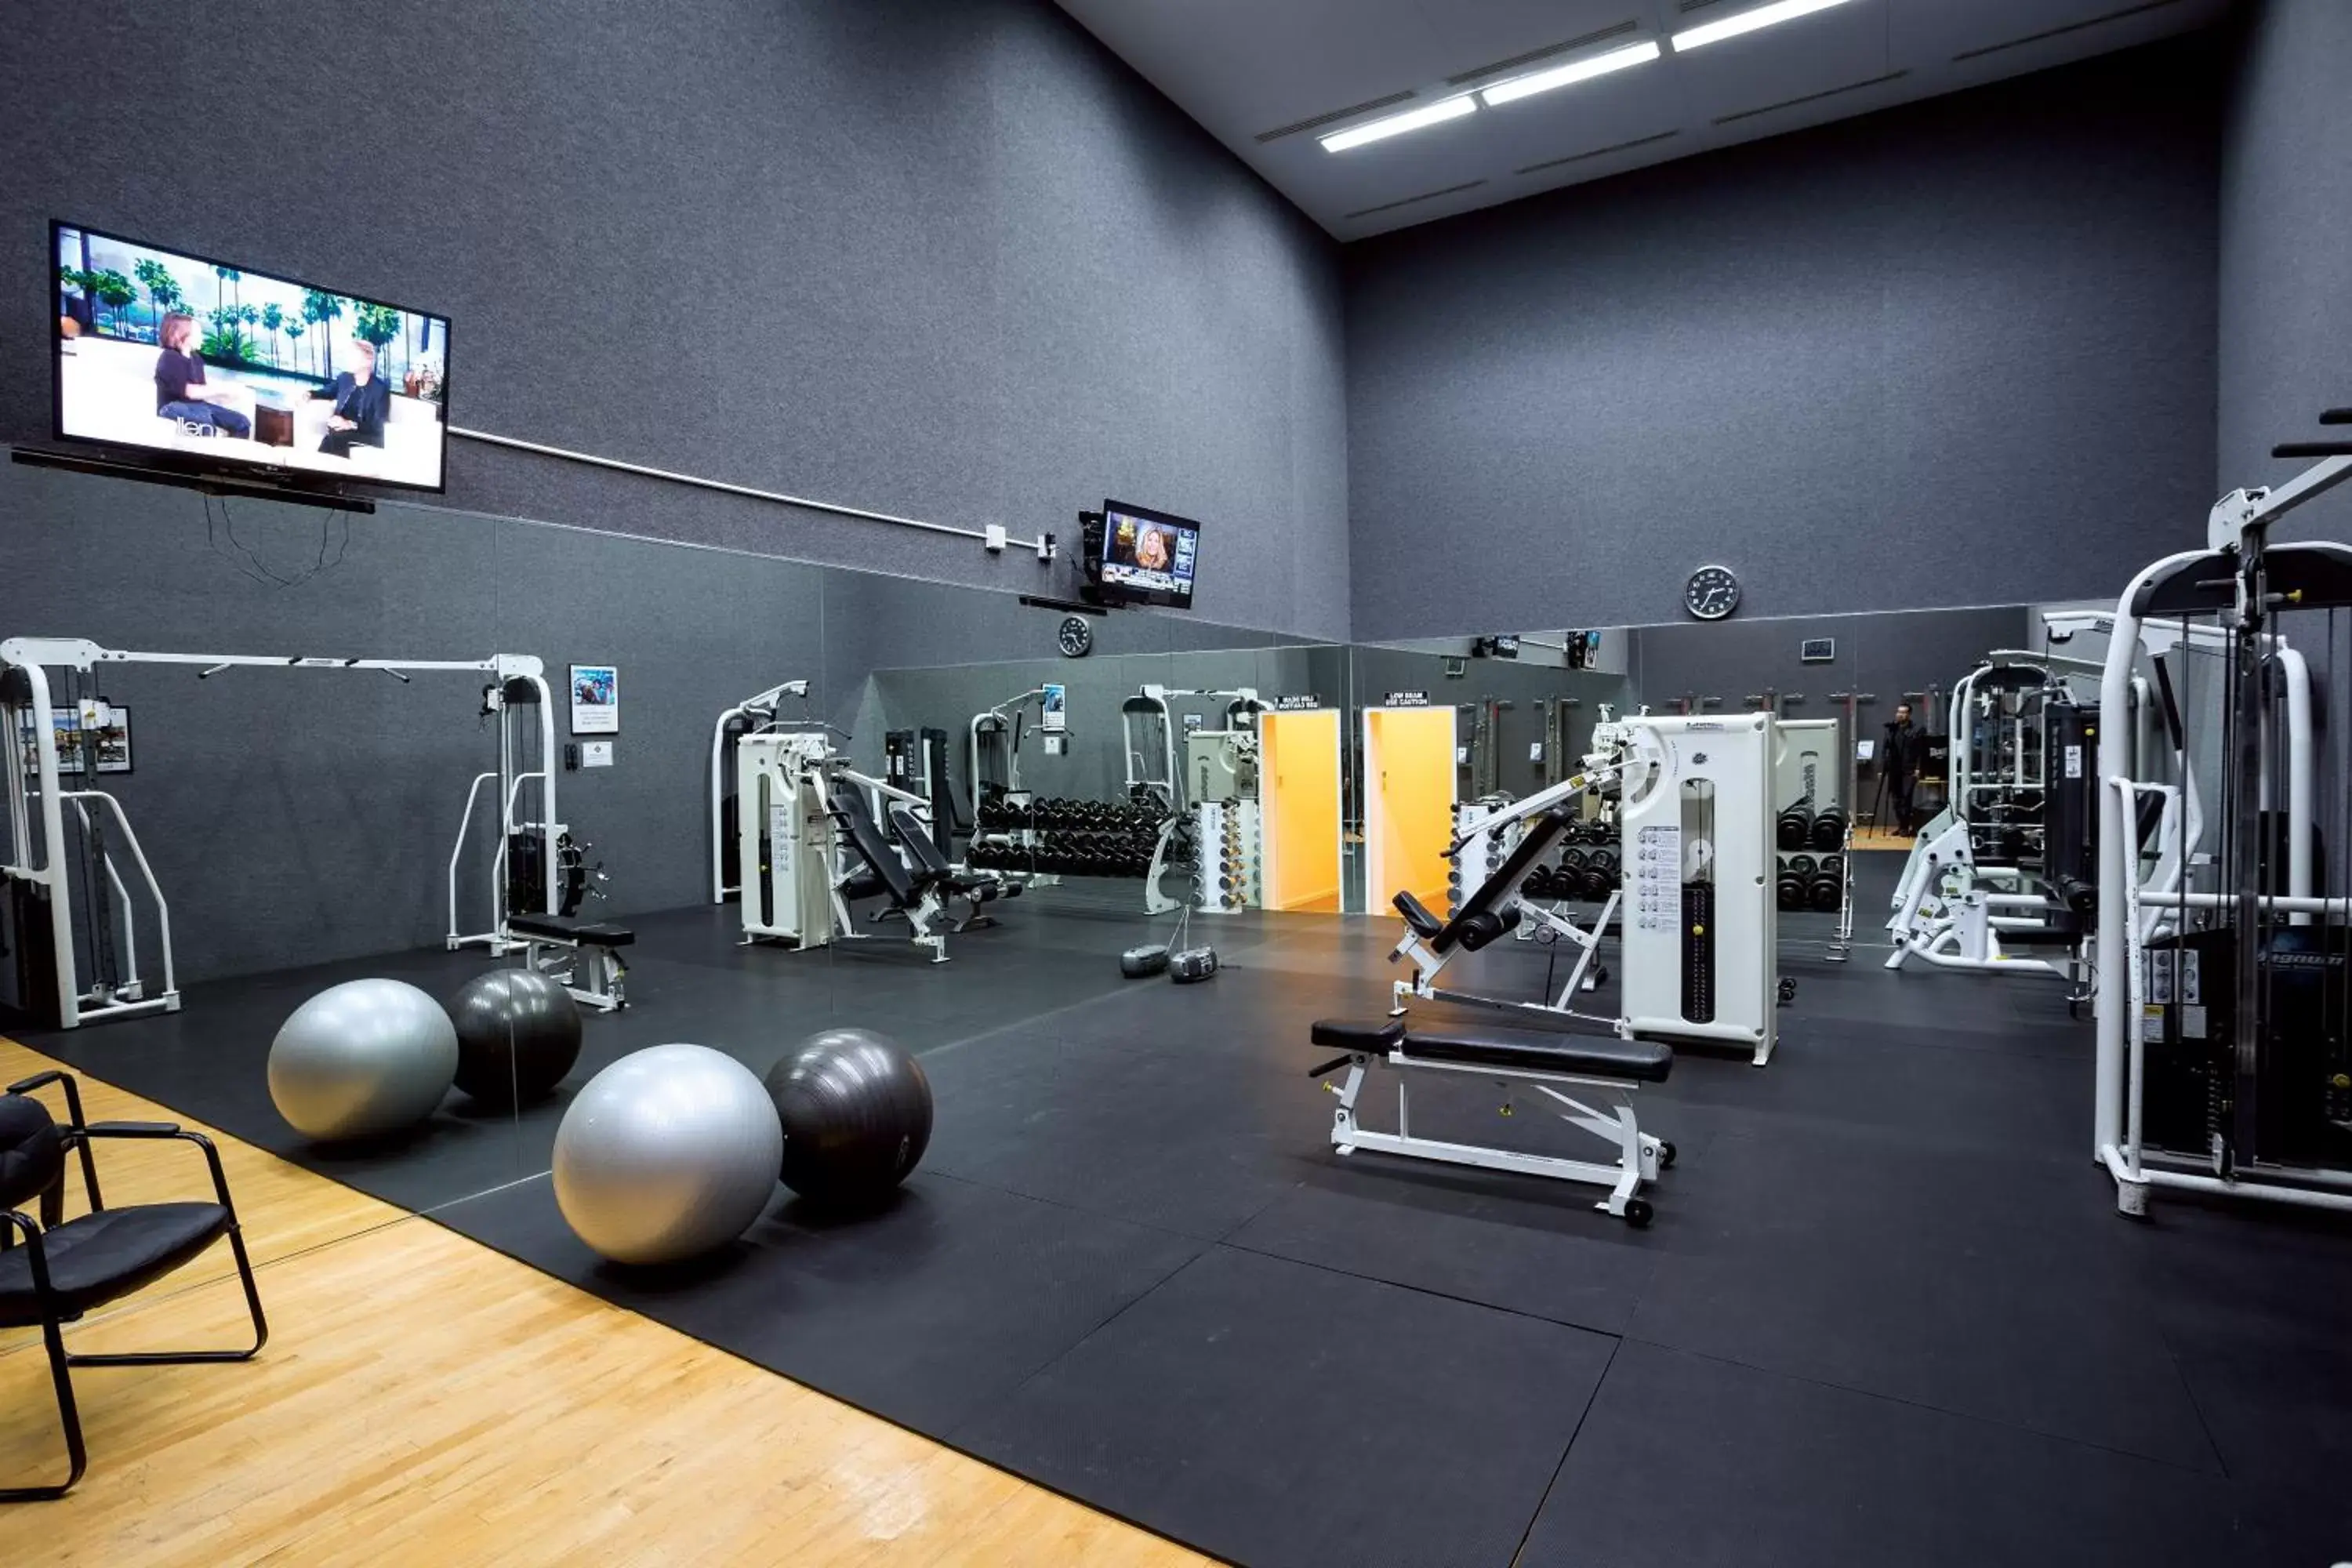 Fitness centre/facilities, Fitness Center/Facilities in The Scottsdale Plaza Resort & Villas